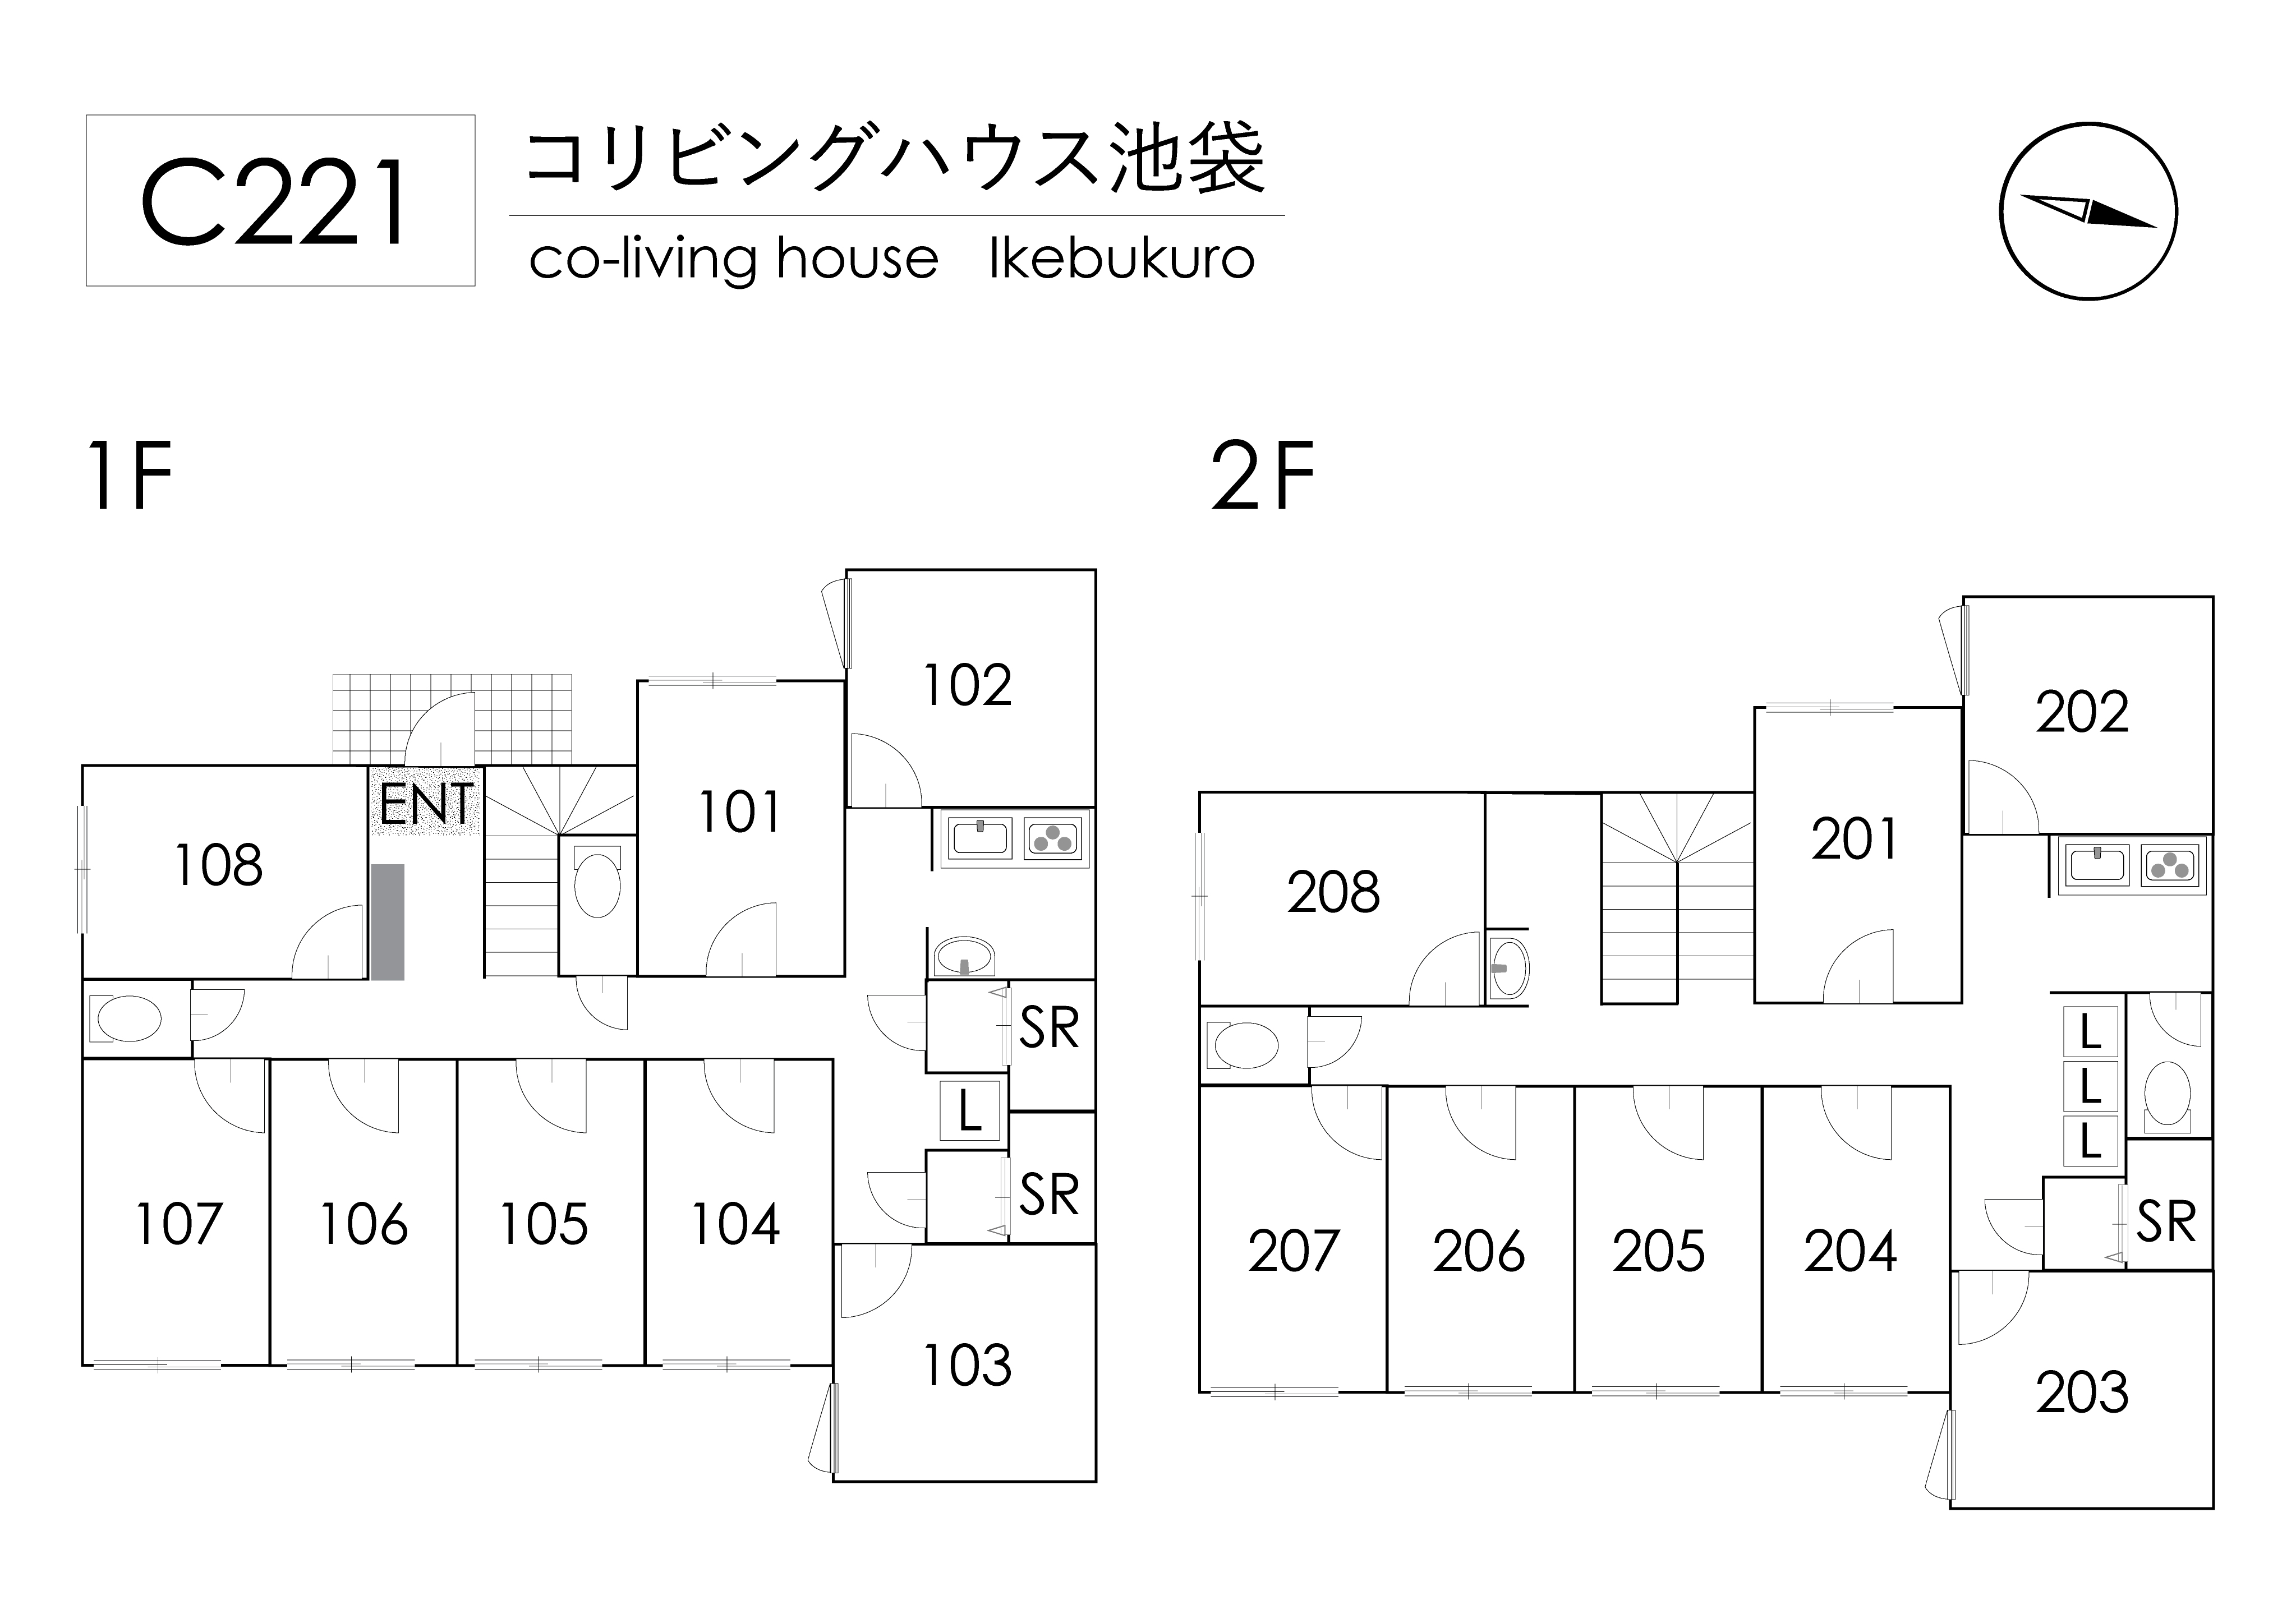 C221/J279 Tokyoβ Kanamecho 1 (Co-living house Ikebukuro)間取り図